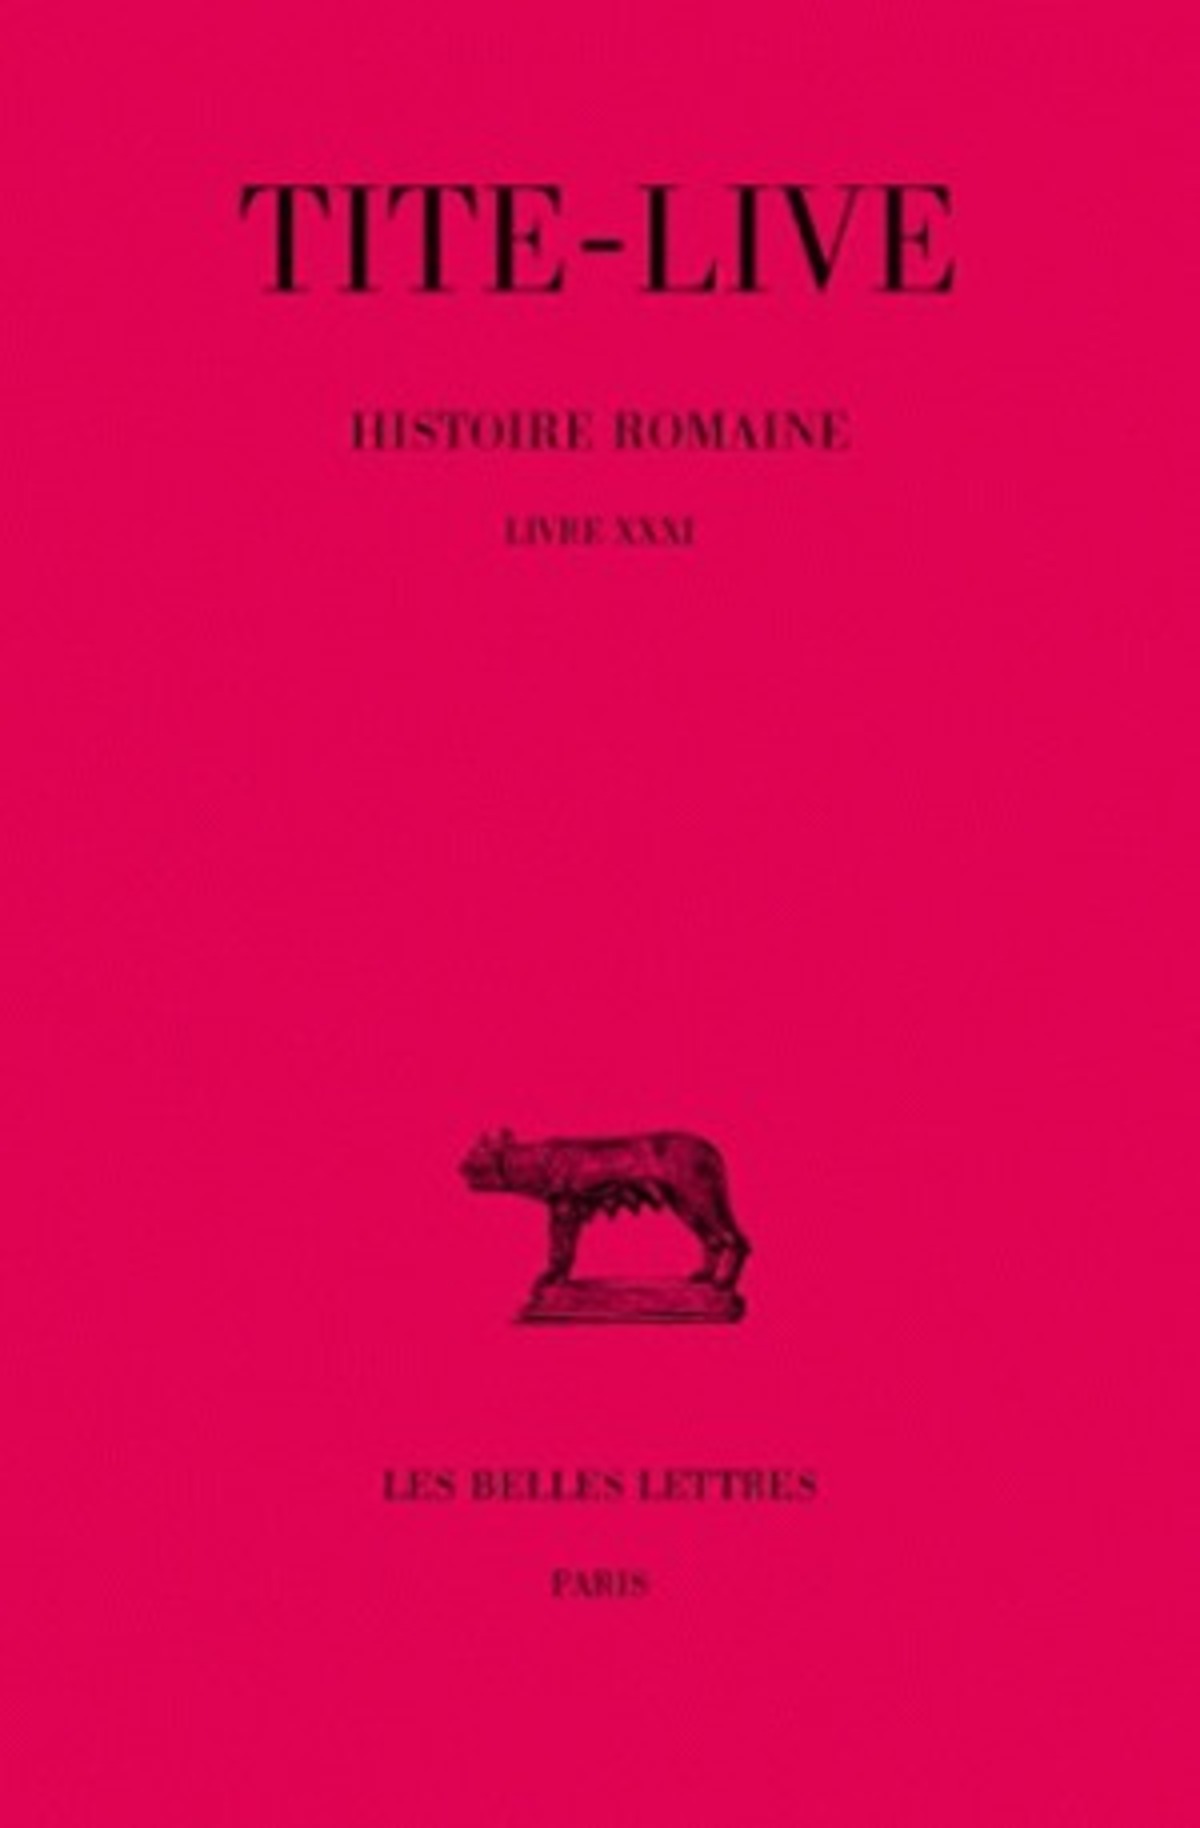 Histoire romaine. Tome XXI : Livre XXXI